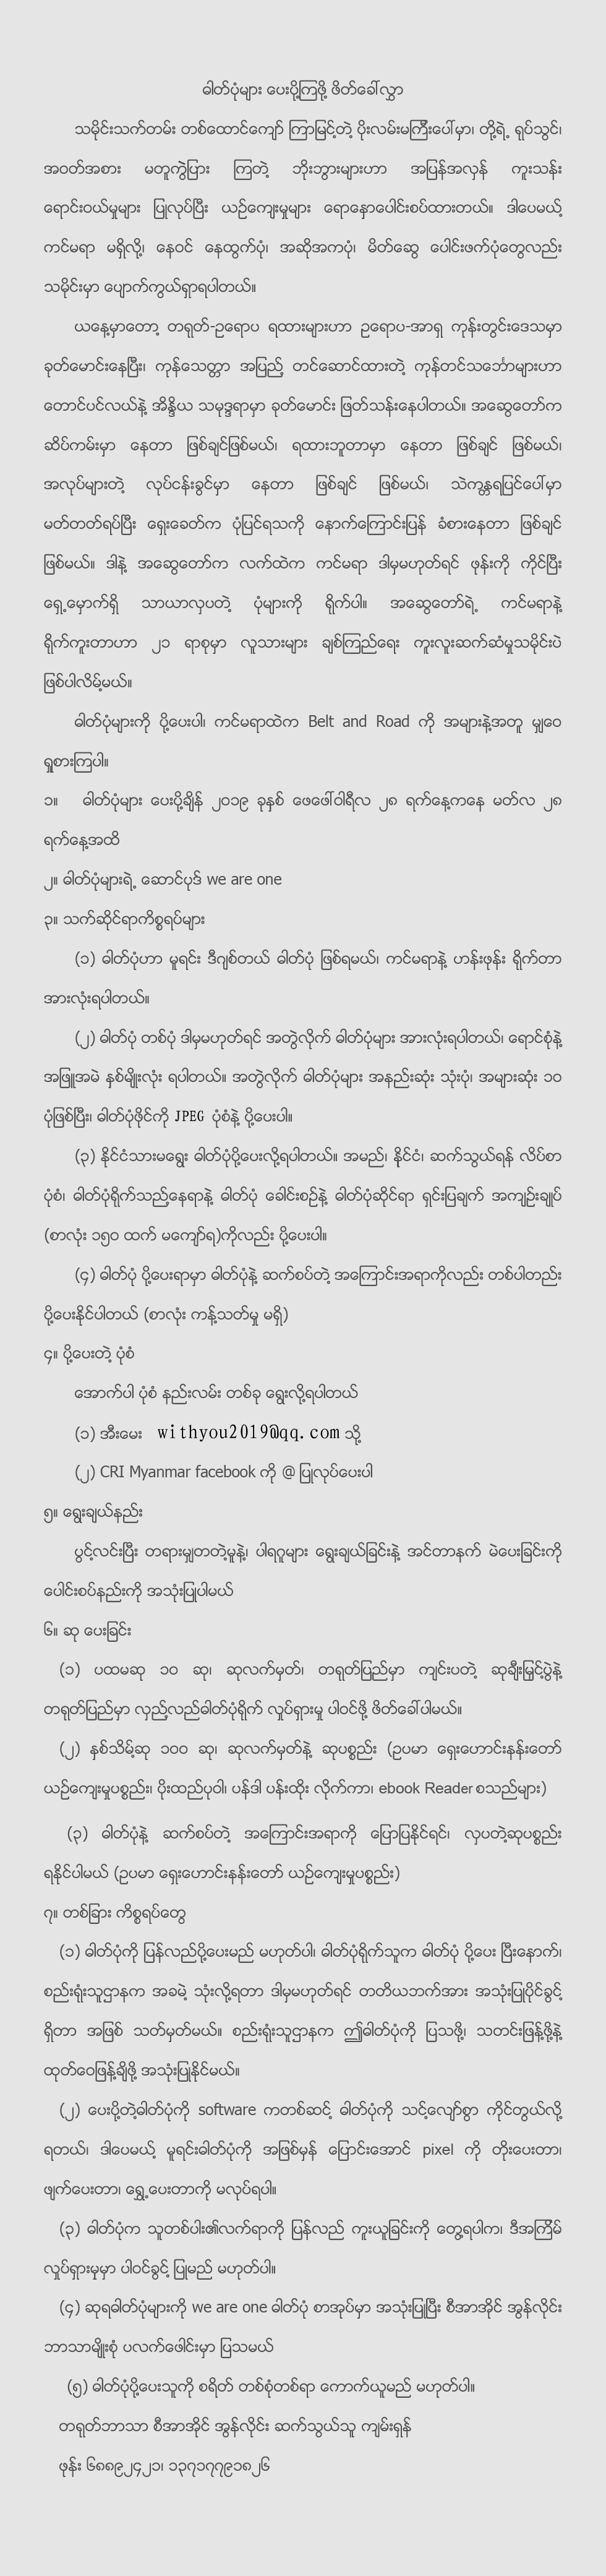 缅甸语图片_fororder_Text-缅甸1